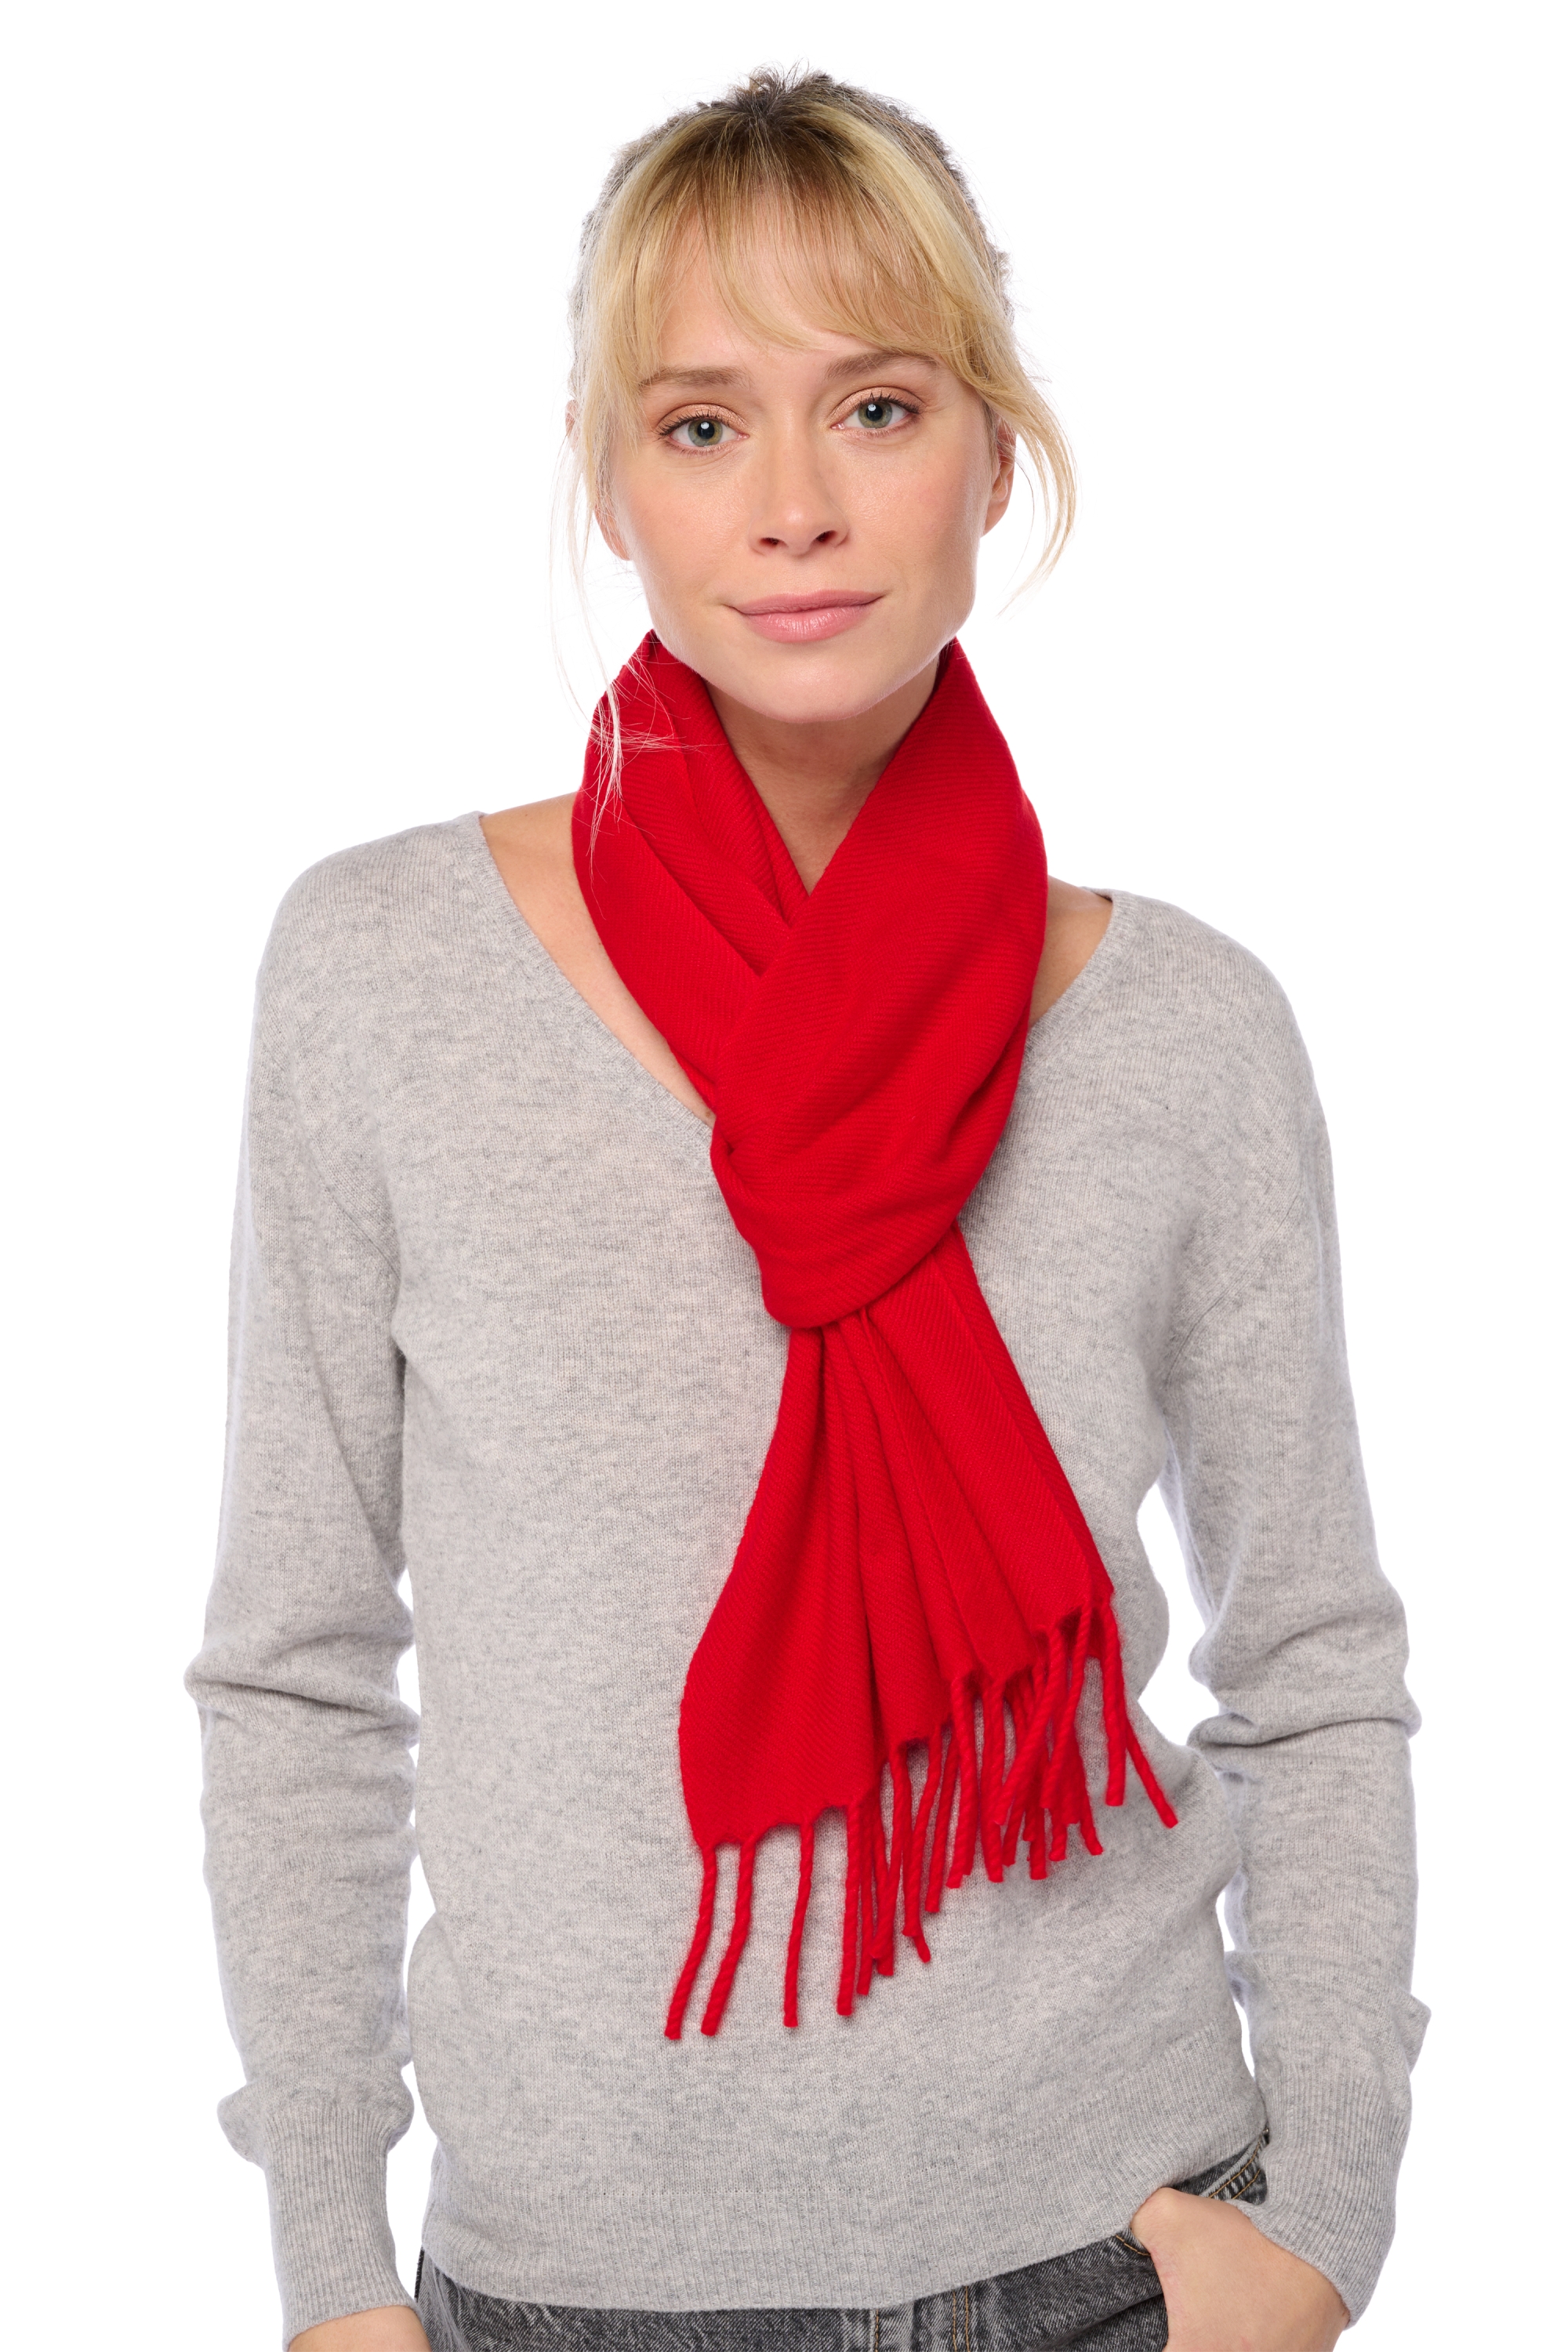 Cashmere accessories scarves mufflers kazu170 flashing red 170 x 25 cm